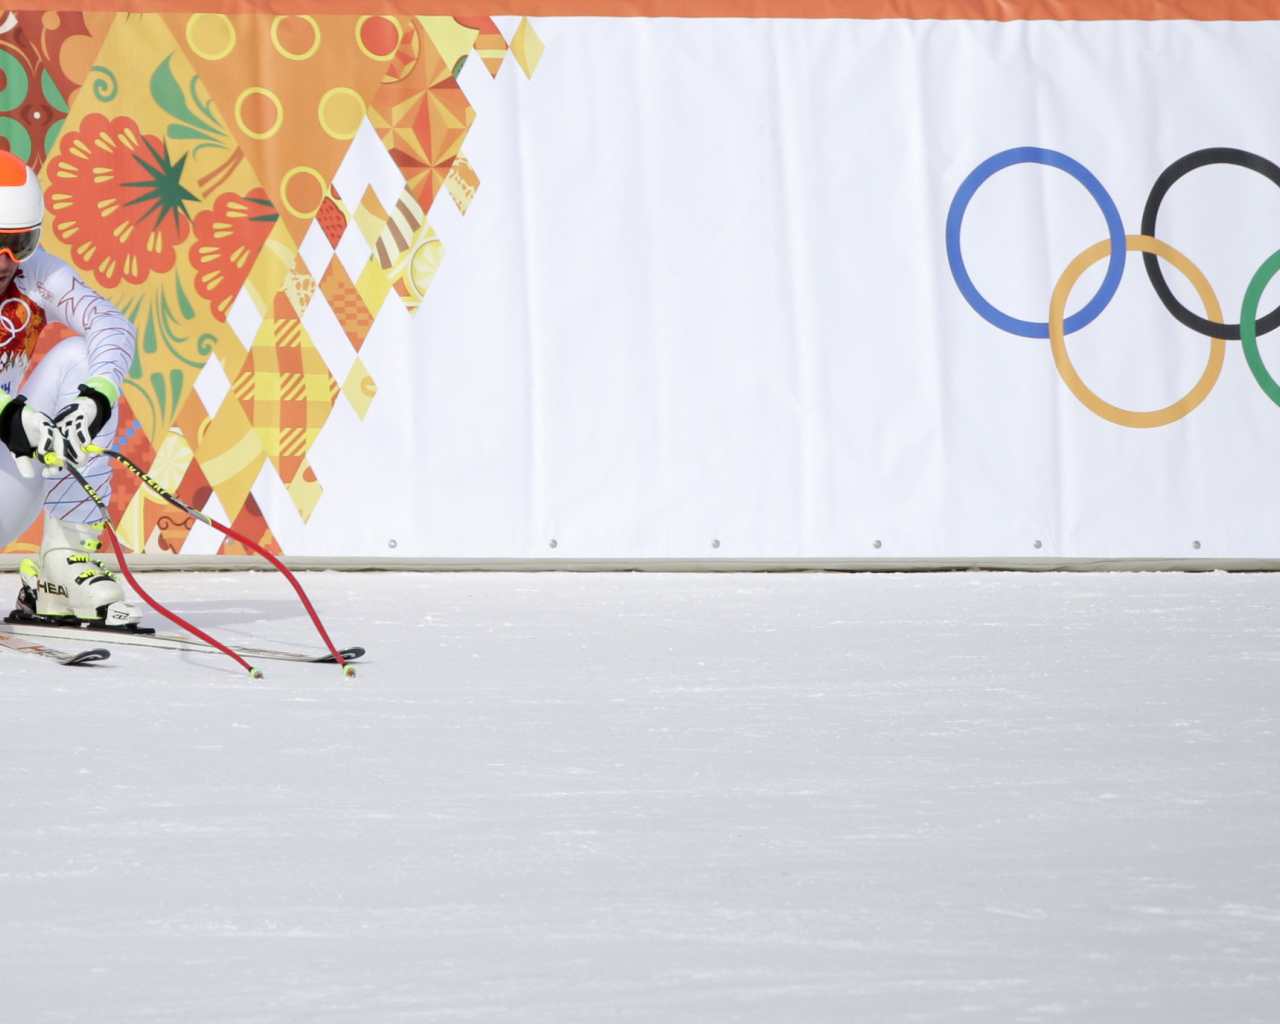 Камил Стох золотой медалист на Олимпиаде в Сочи